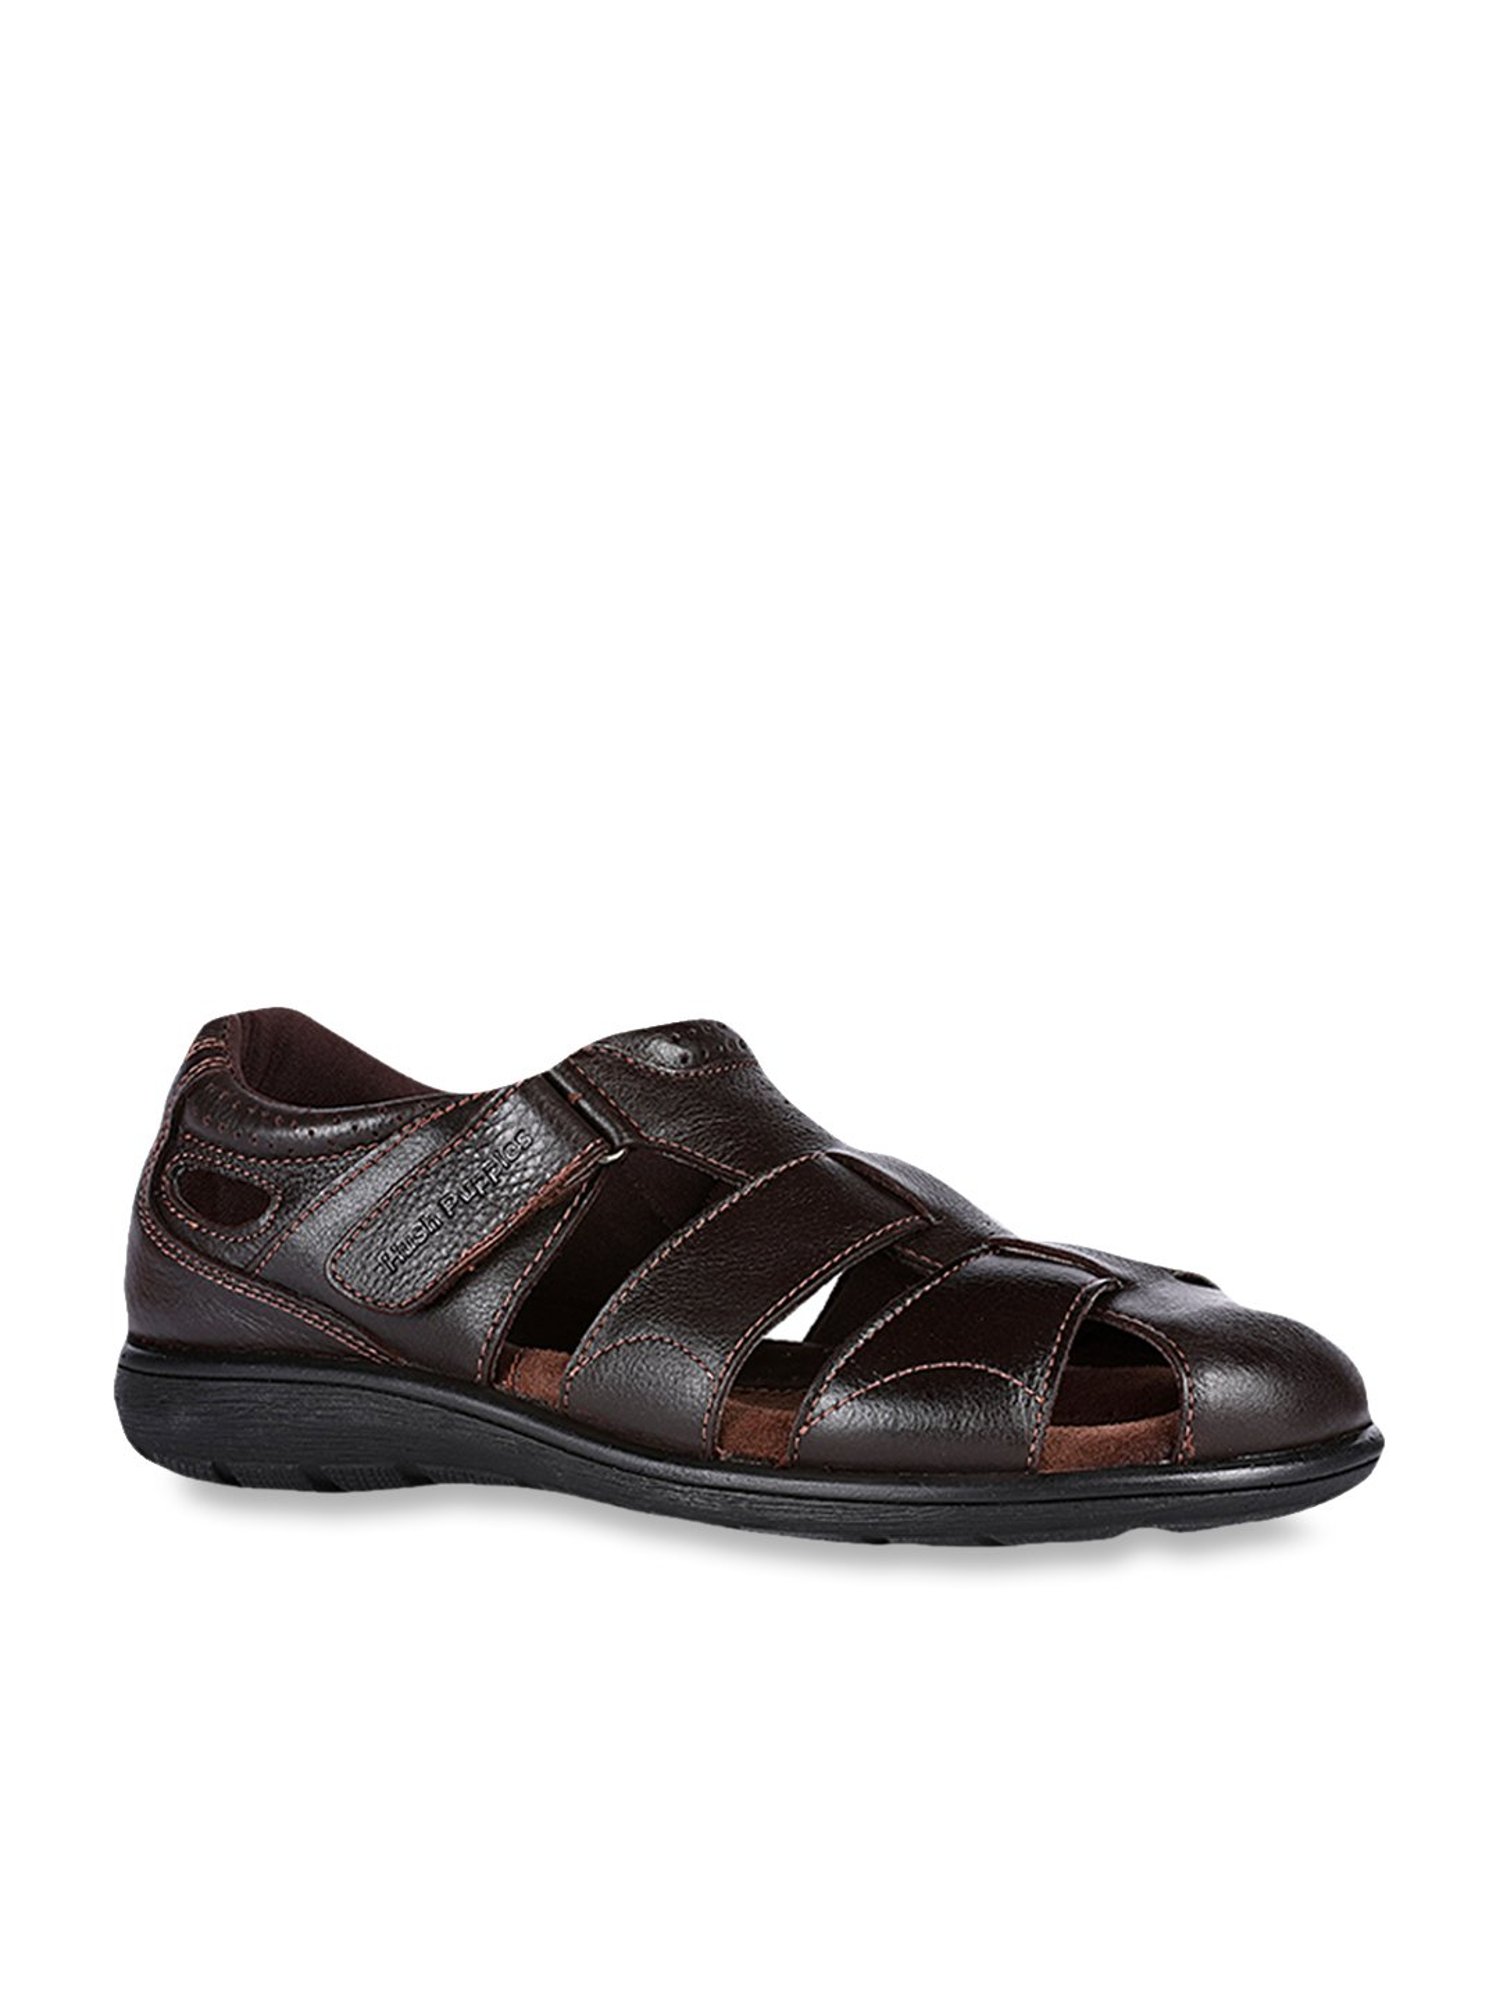 Buy Bata Men's Brown Back Strap Sandals for Men at Best Price @ Tata CLiQ